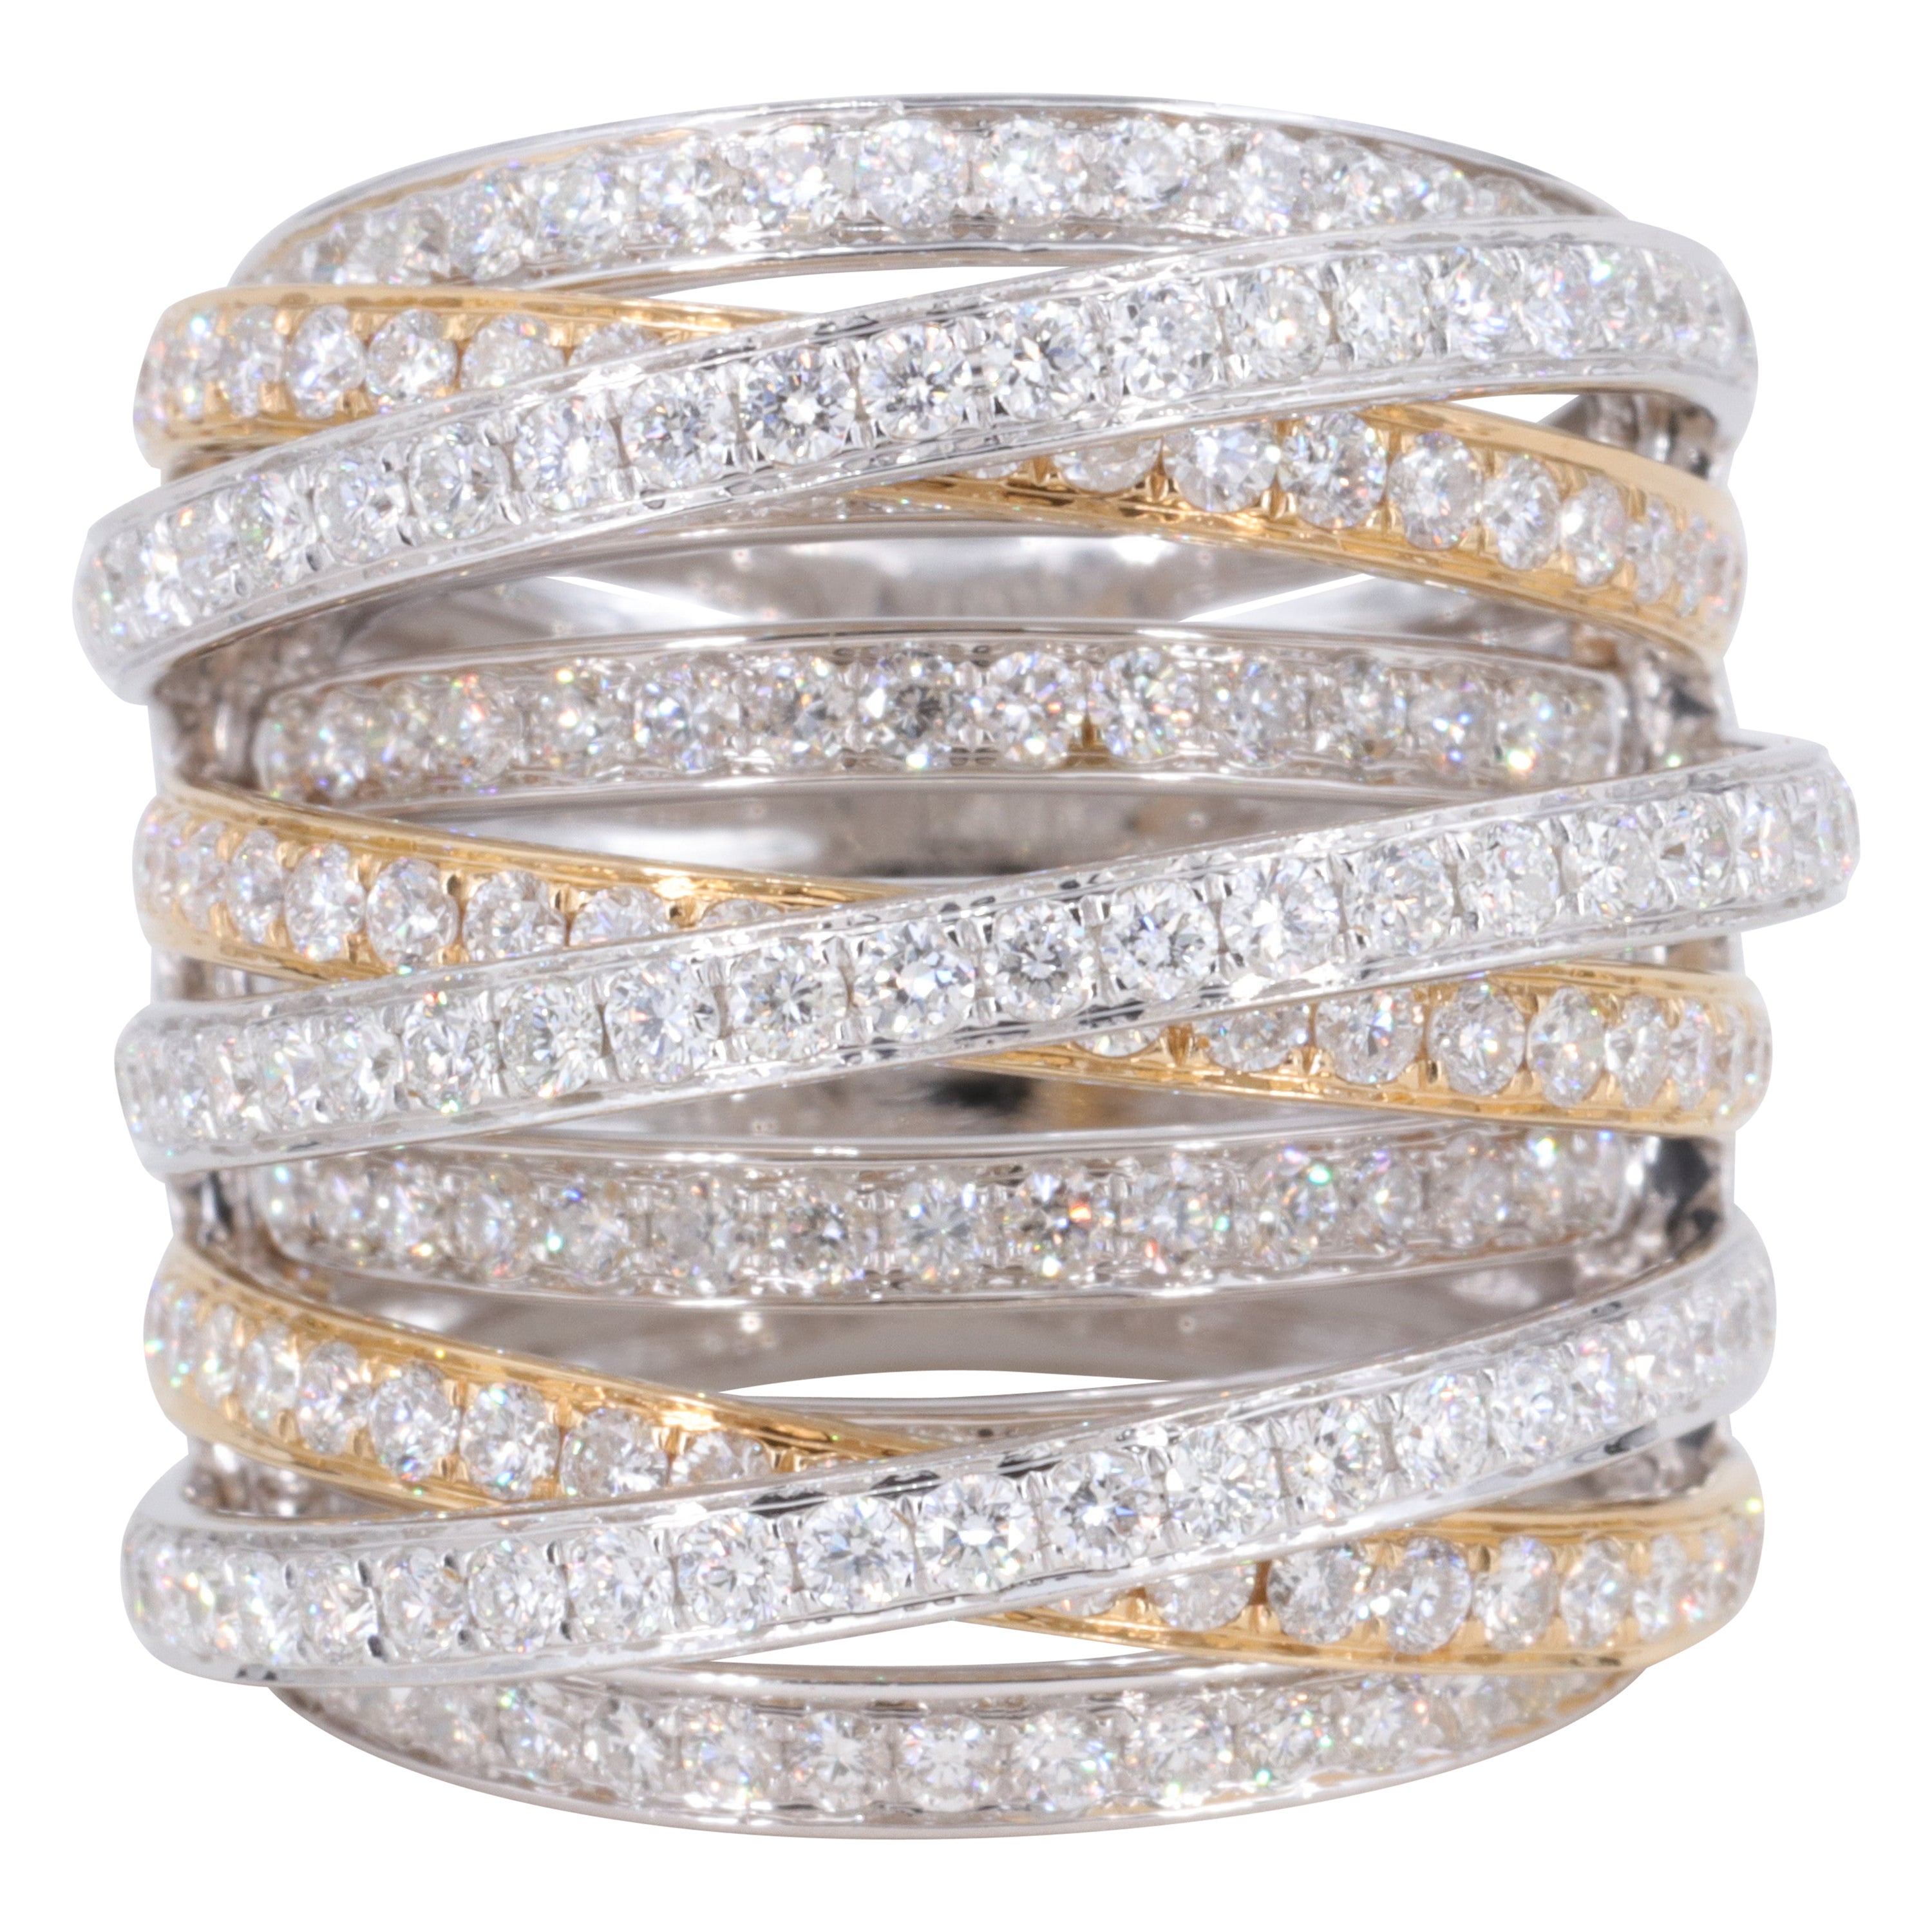 4.52 Carat Diamond Multi Row 18 Karat White & Yellow Gold Cocktail Ring Band For Sale